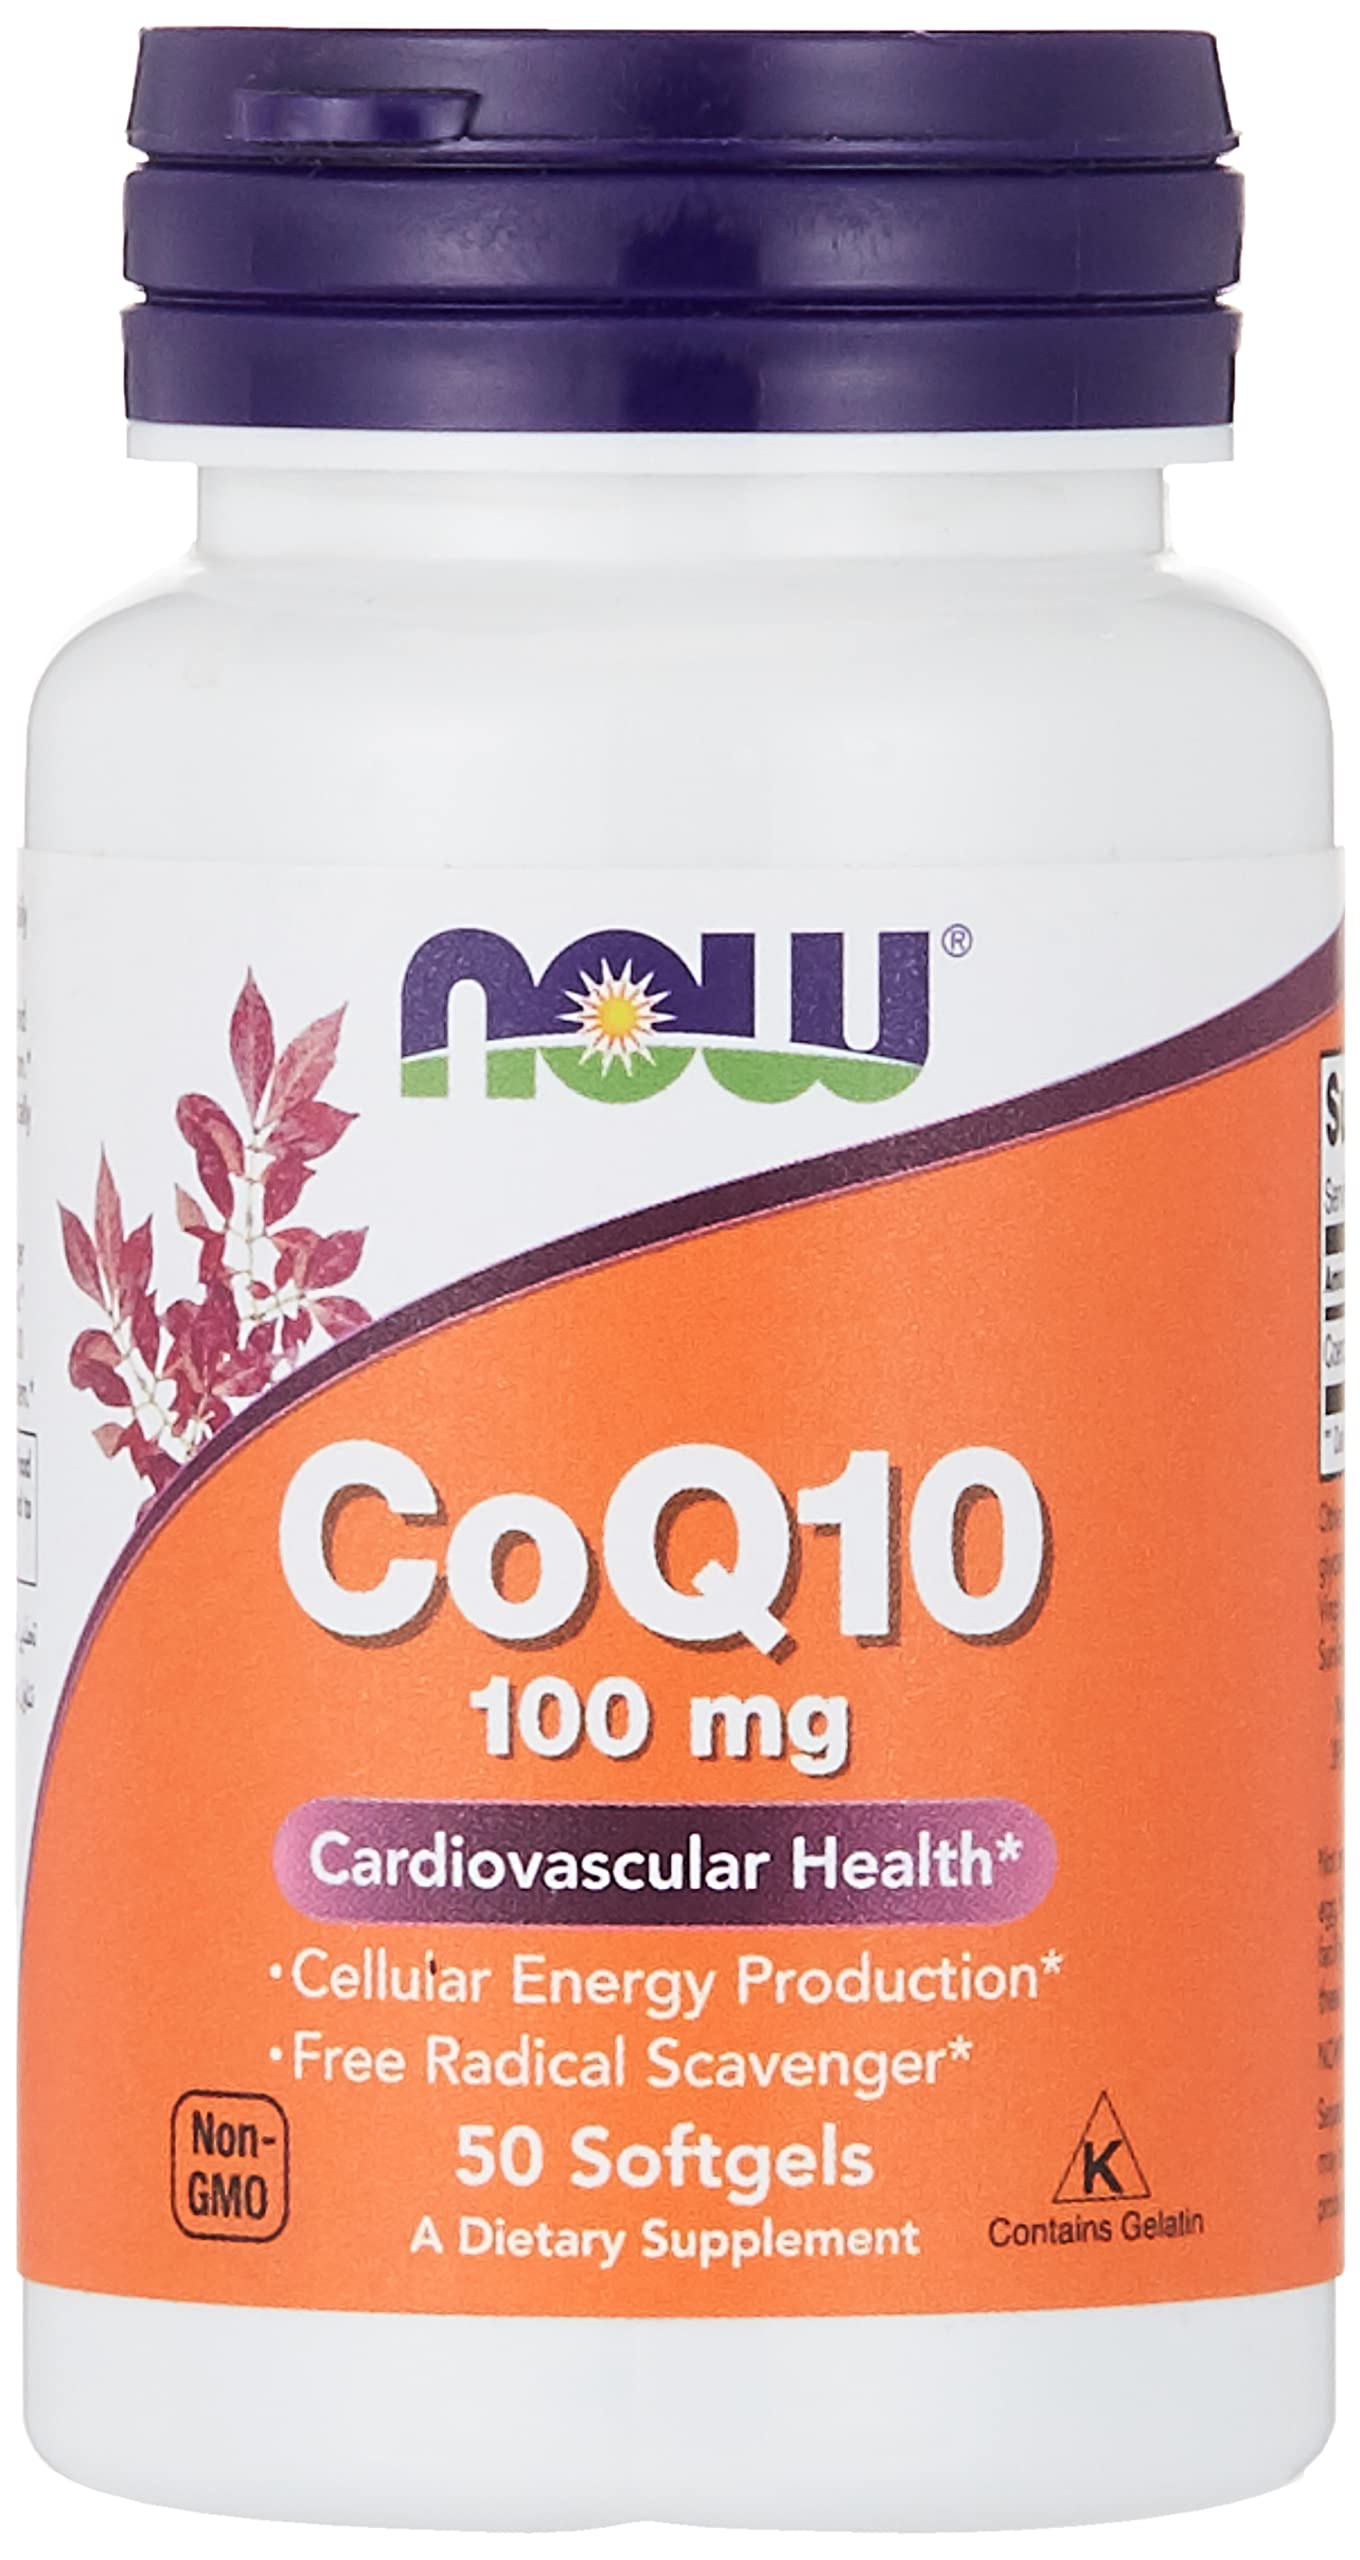 Now Foods Coq10 Vitamin, 100 Mg 50 Softgels